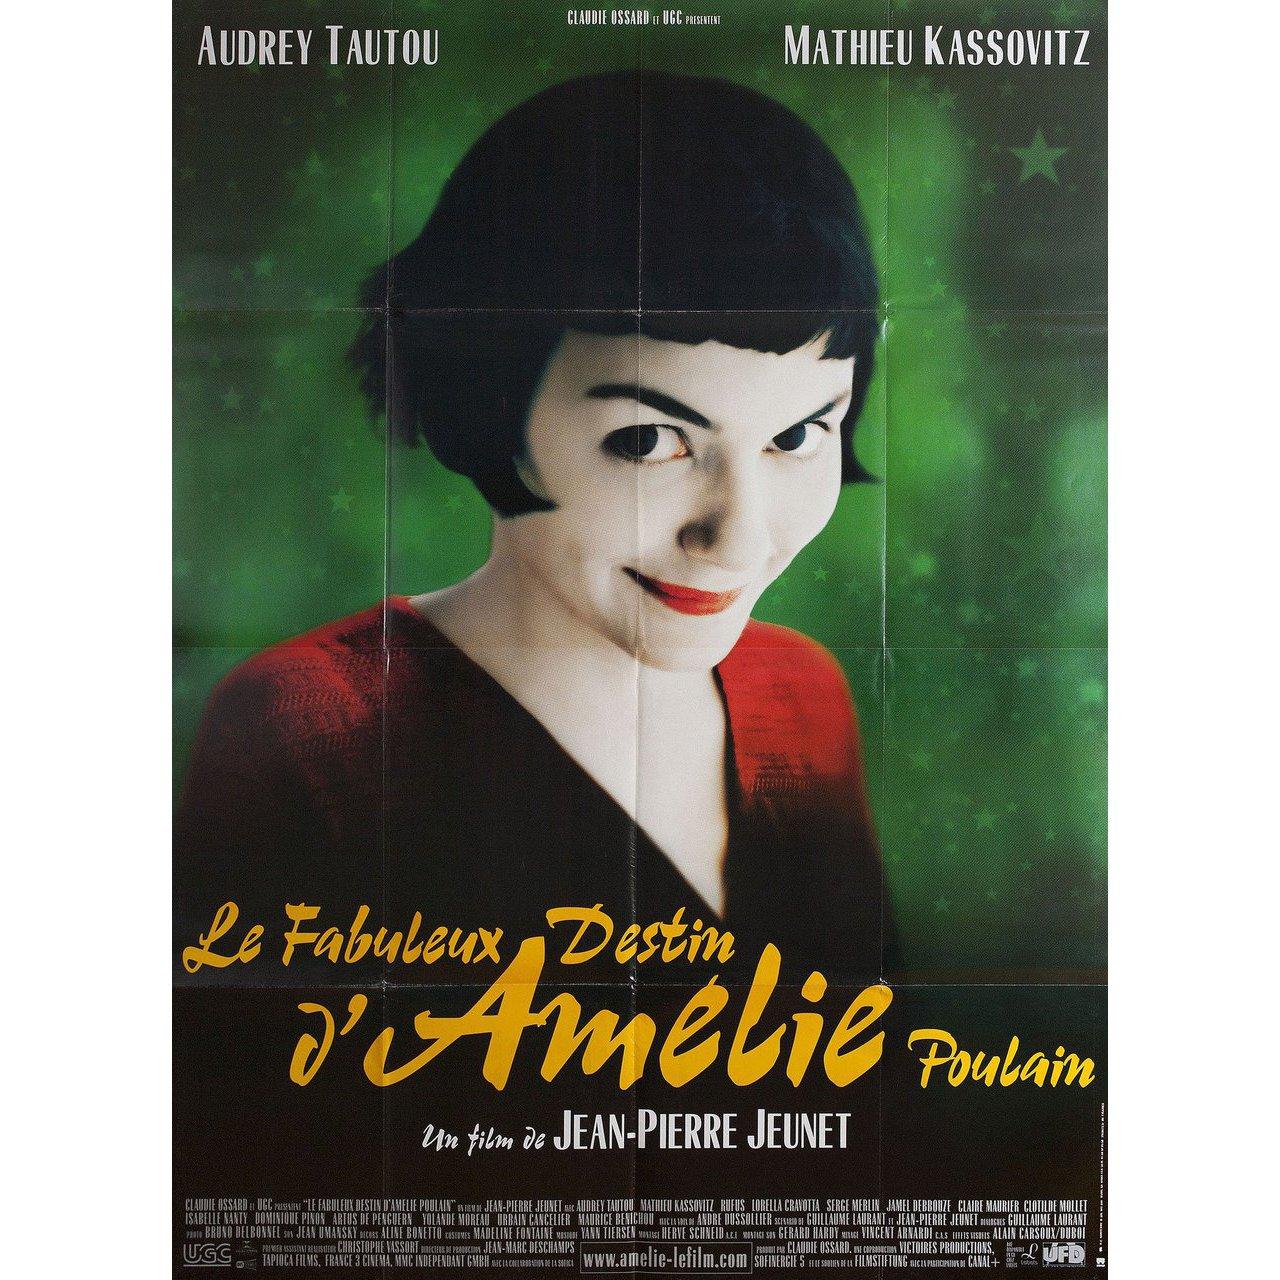 2001 french film